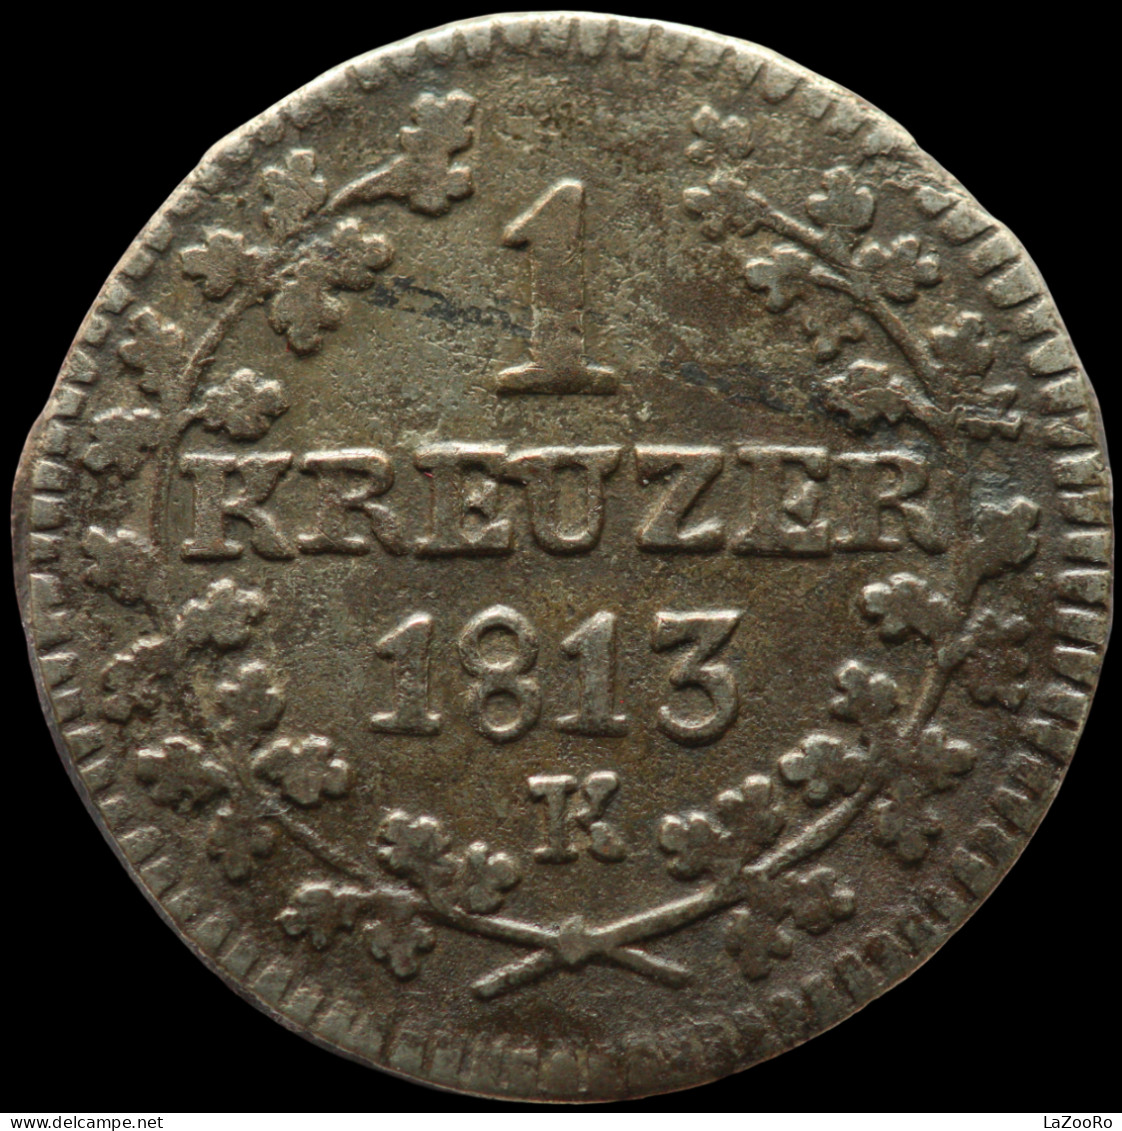 LaZooRo: Switzerland SAINT GALL 1 Kreuzer 1813 K VF - Silver - Cantonal Coins